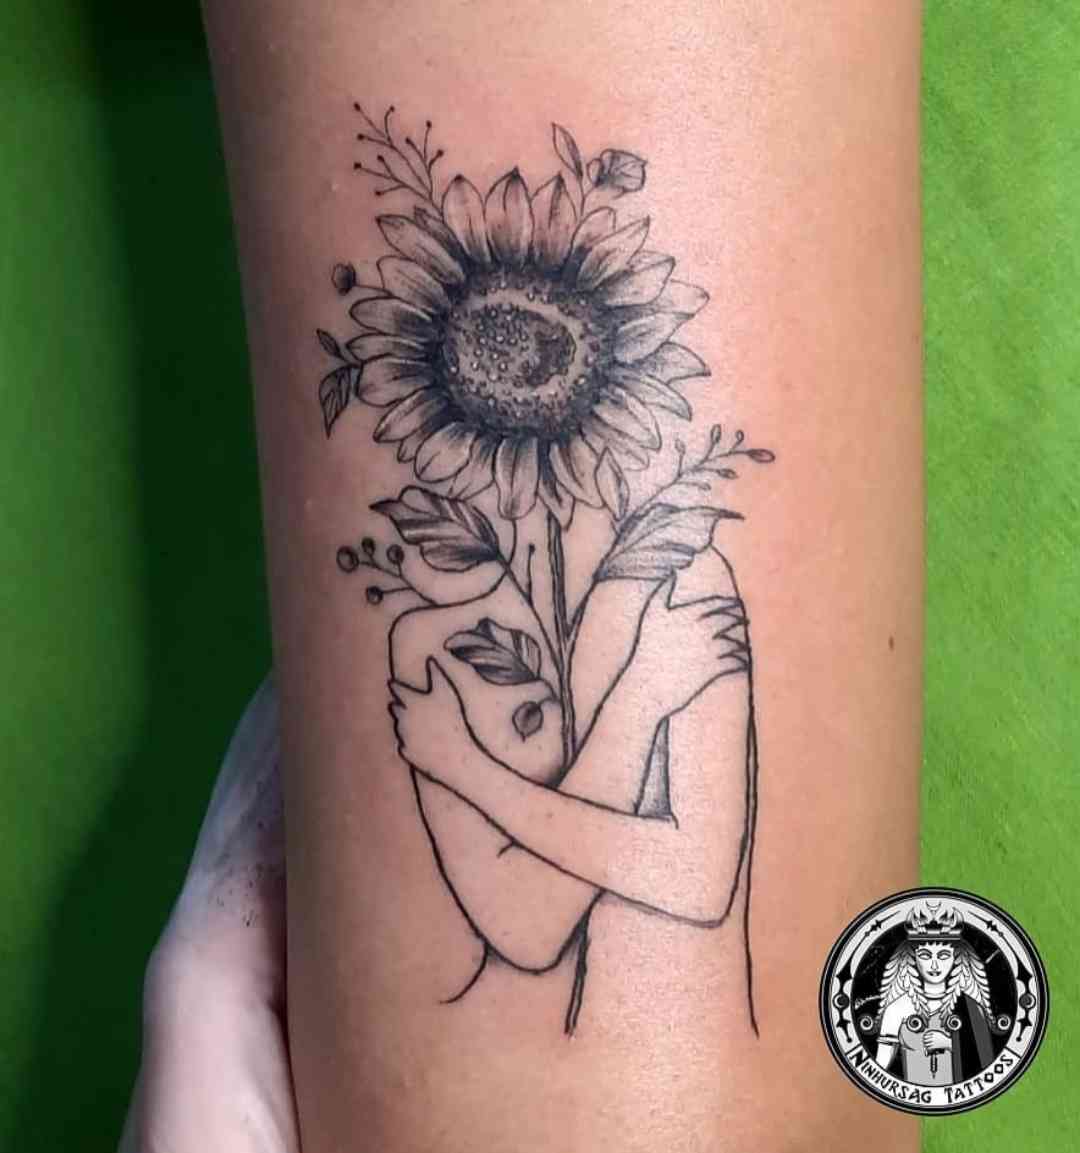 A lil self love and whatnot #StencilStuff #Sharpie  #IndianapolisTattooArtist #Indy #Indianapolis #Tattoos #Tattoo #GetATattoo  #BlackAndG... | Instagram